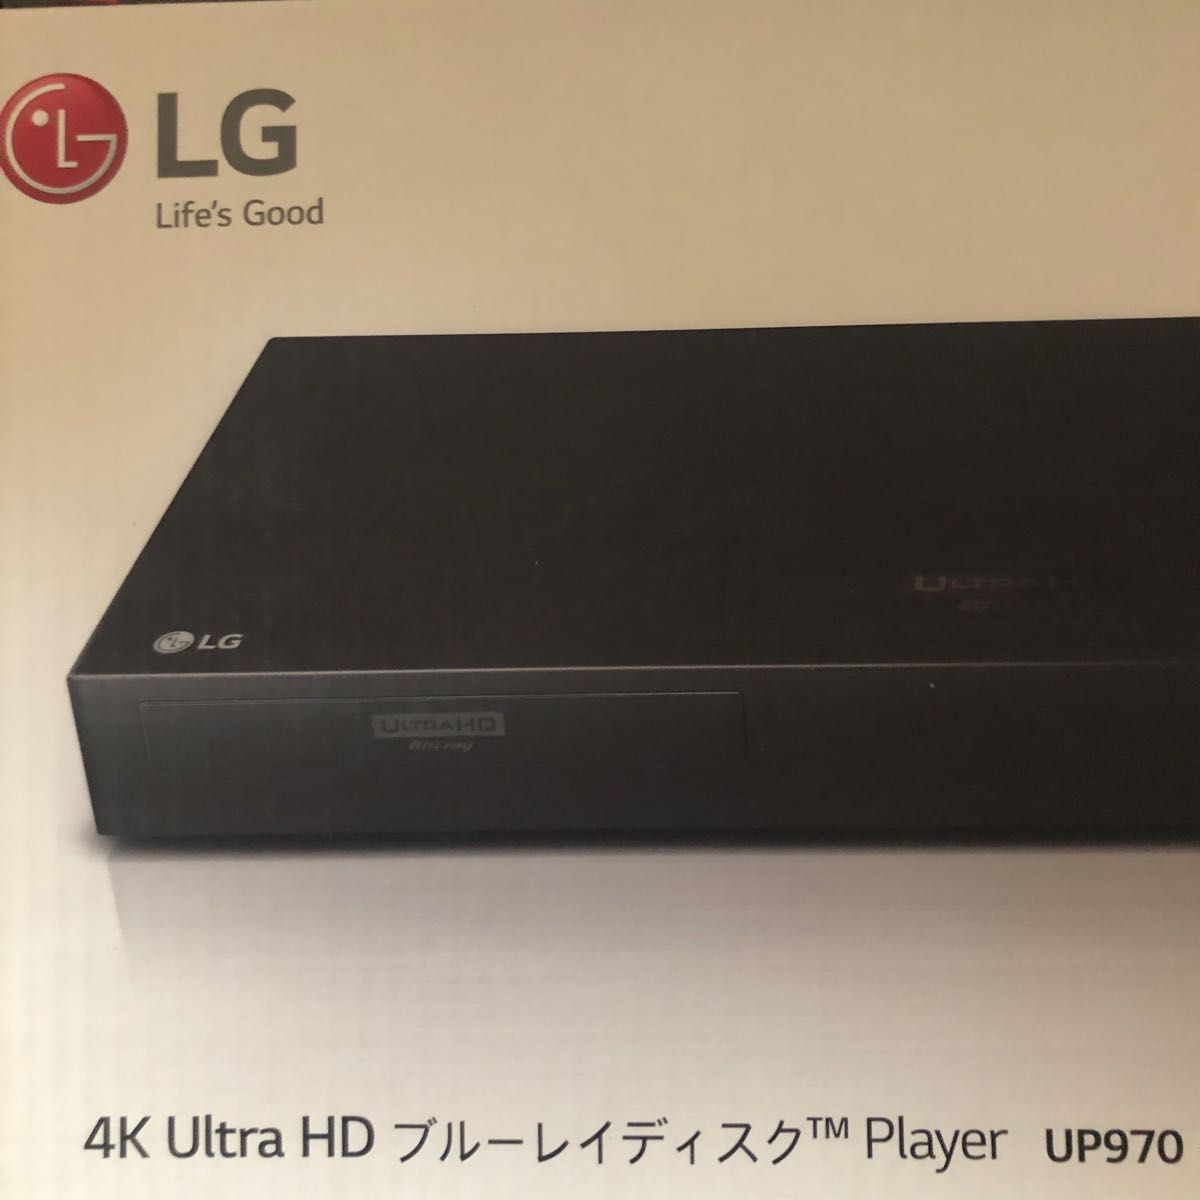 LG 4Kブルーレイプレーヤー 4K Ultra HDドルビービジョン対応 HDR対応 Wi-Fi内蔵 UP970